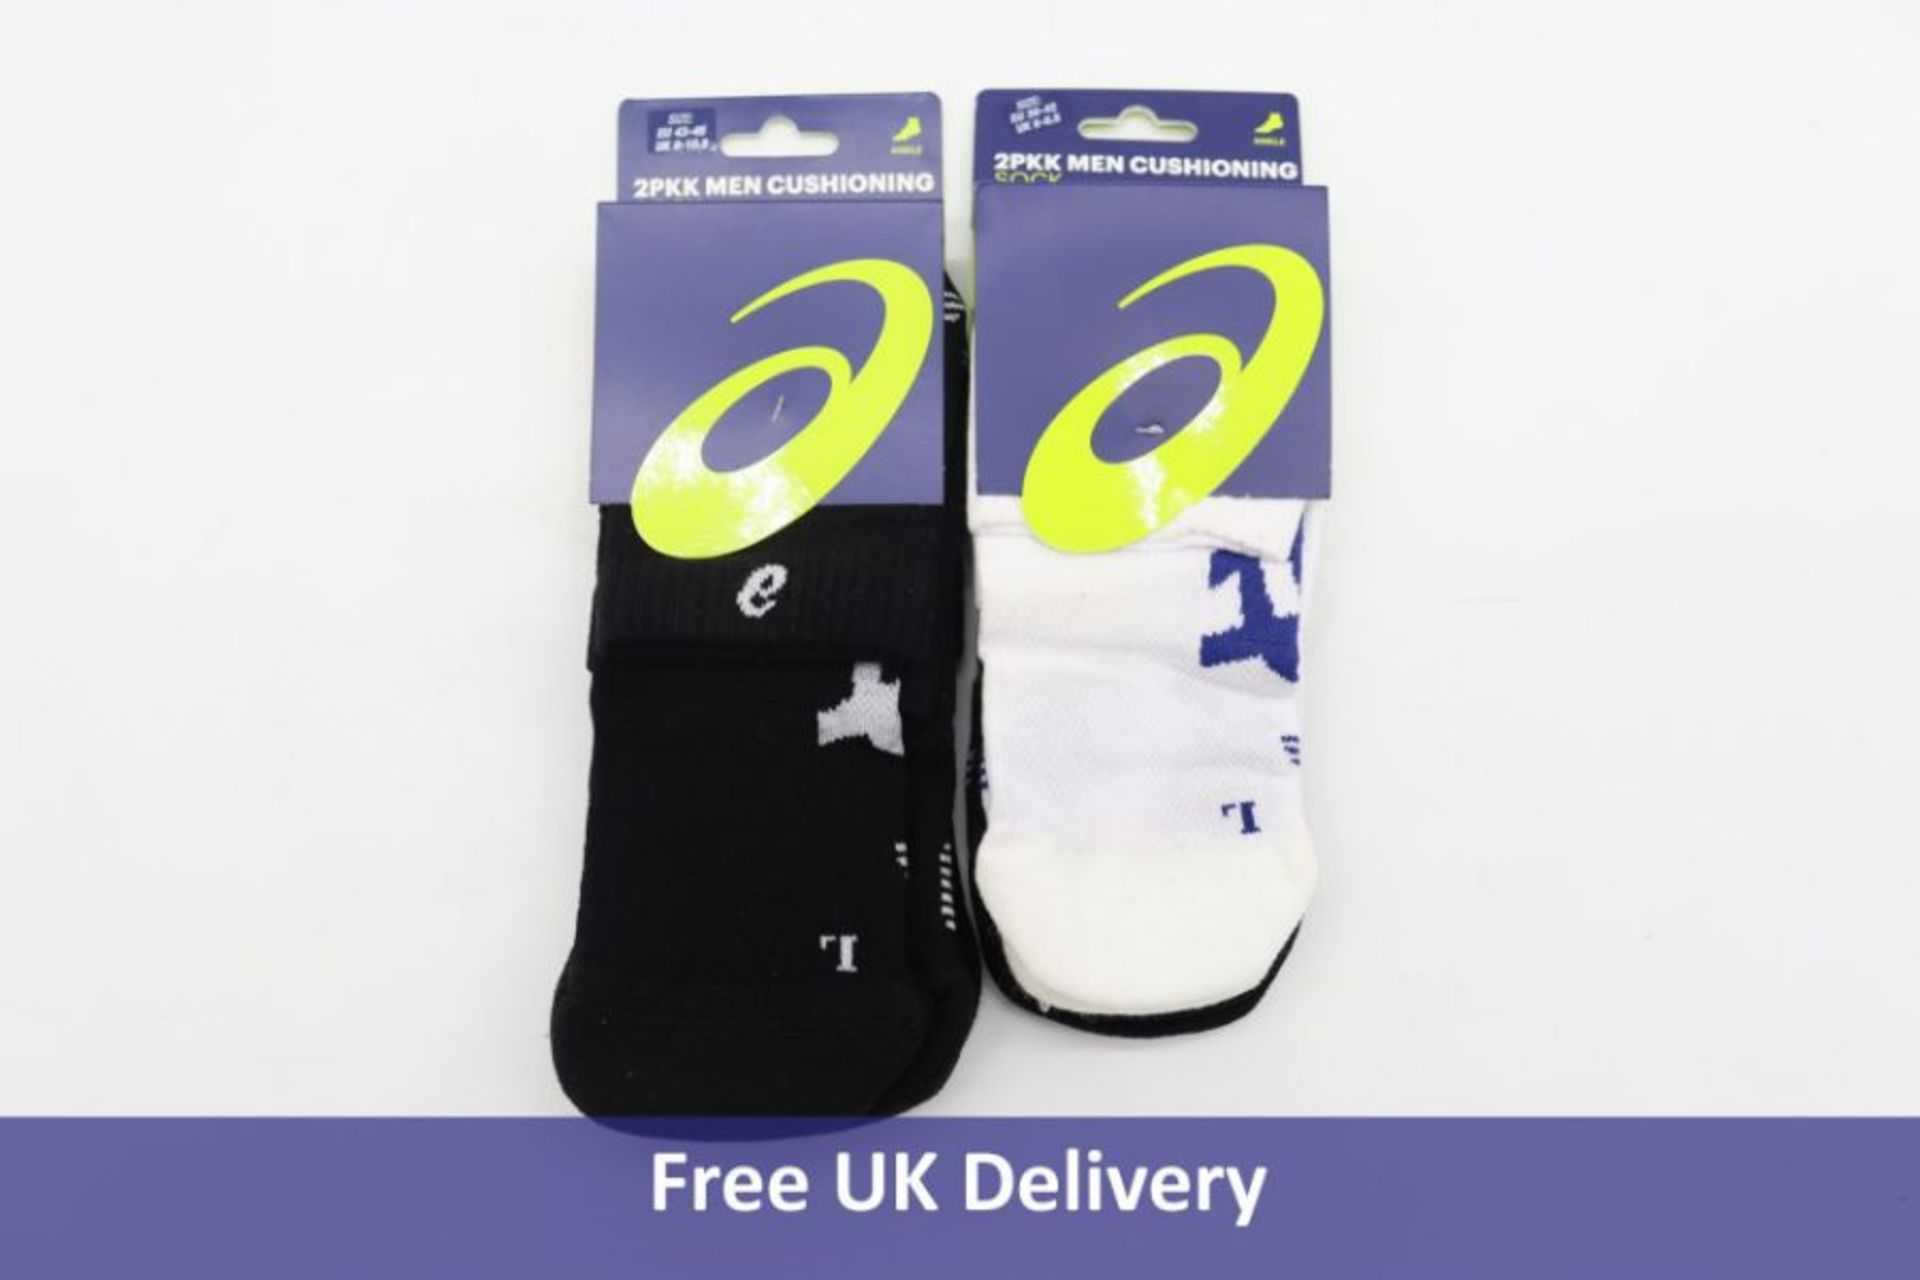 Five Asics Men's Cushioning Socks to include 4x UK 9-10.5, Black, 1x UK 6-8.5, Black/White